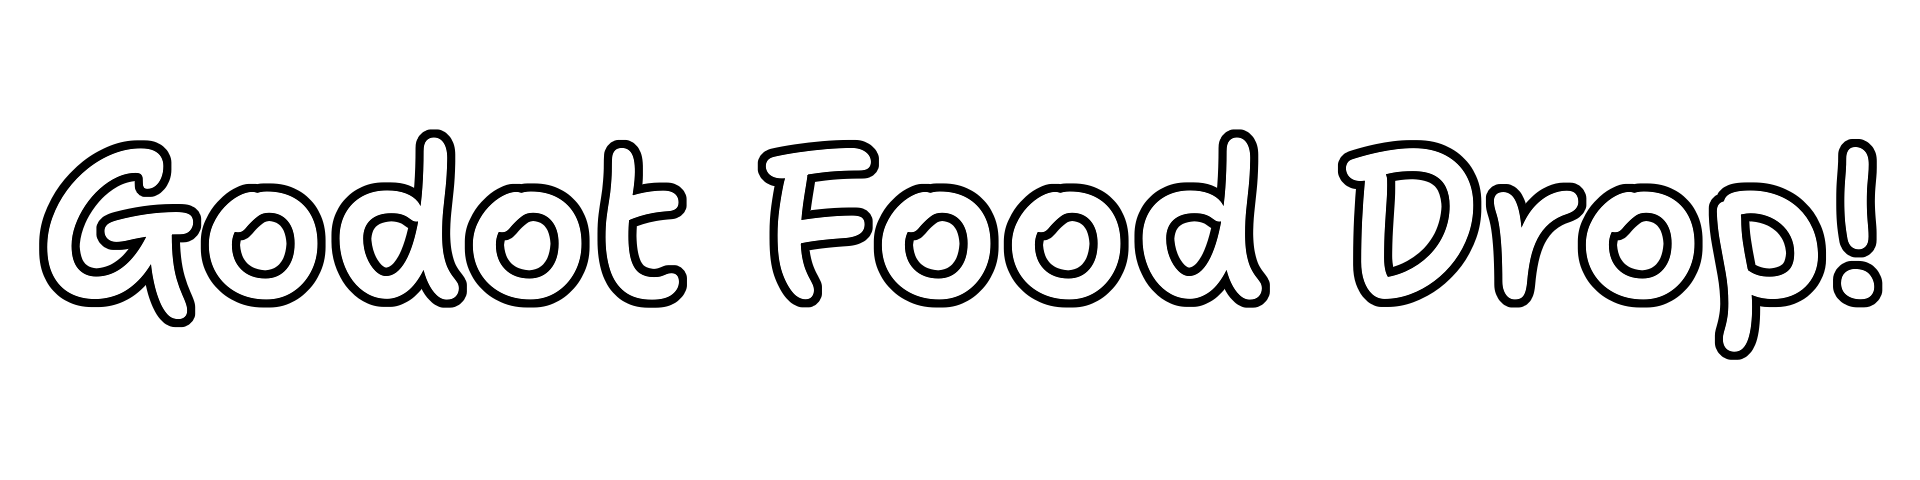 Godot Food Drop